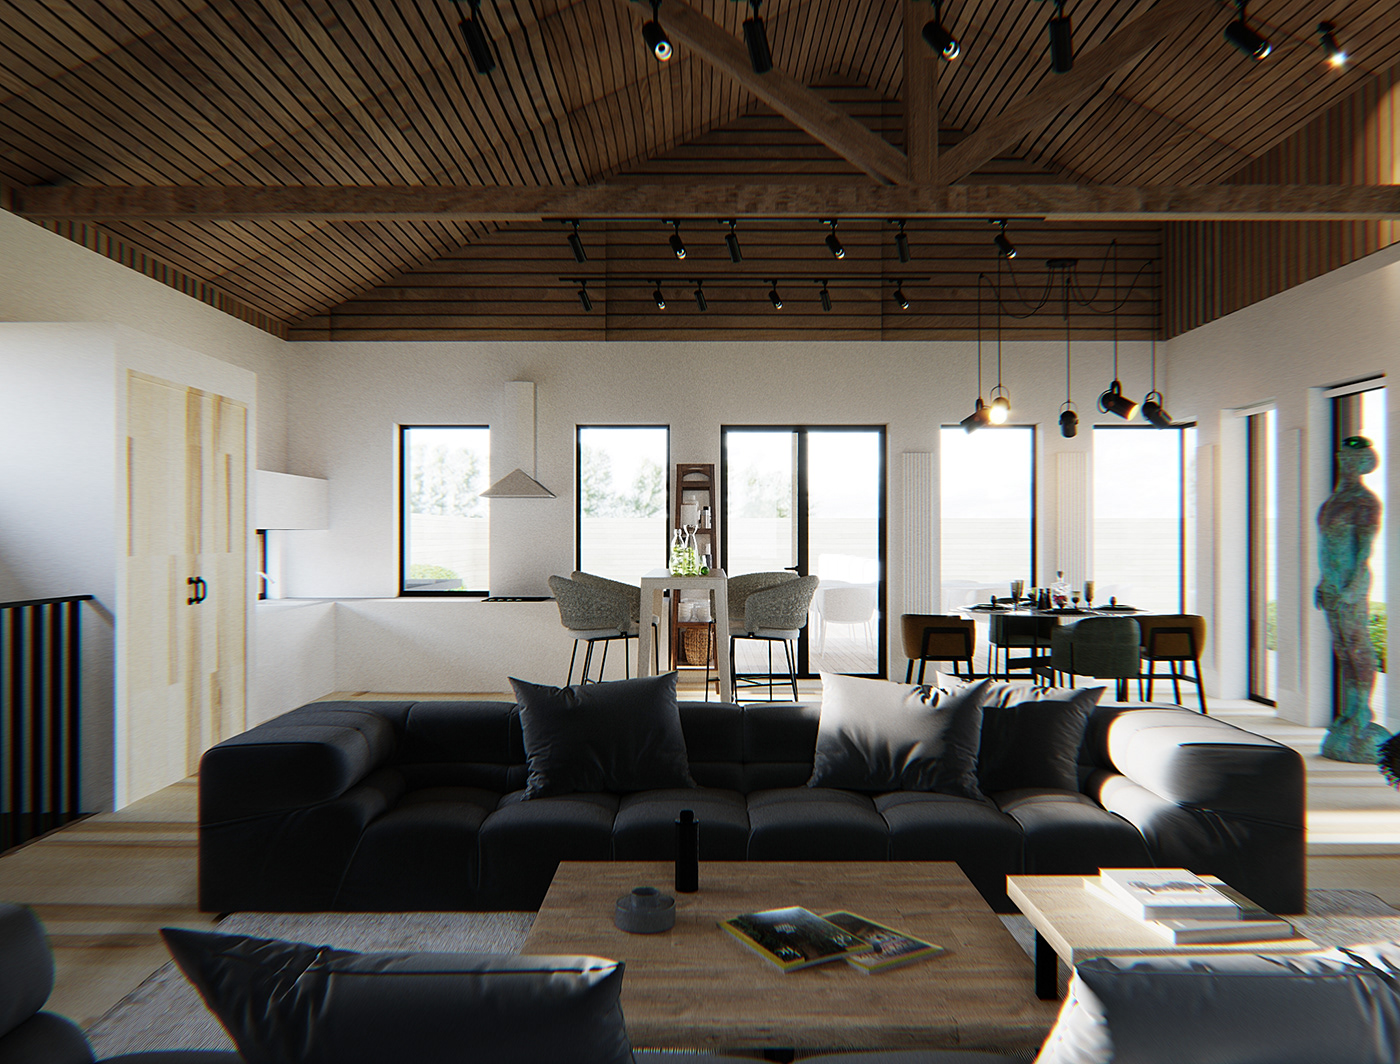 проект кухня interior design  architecture visualization archviz apartment design bedroom kitchen kaleniukarchitect